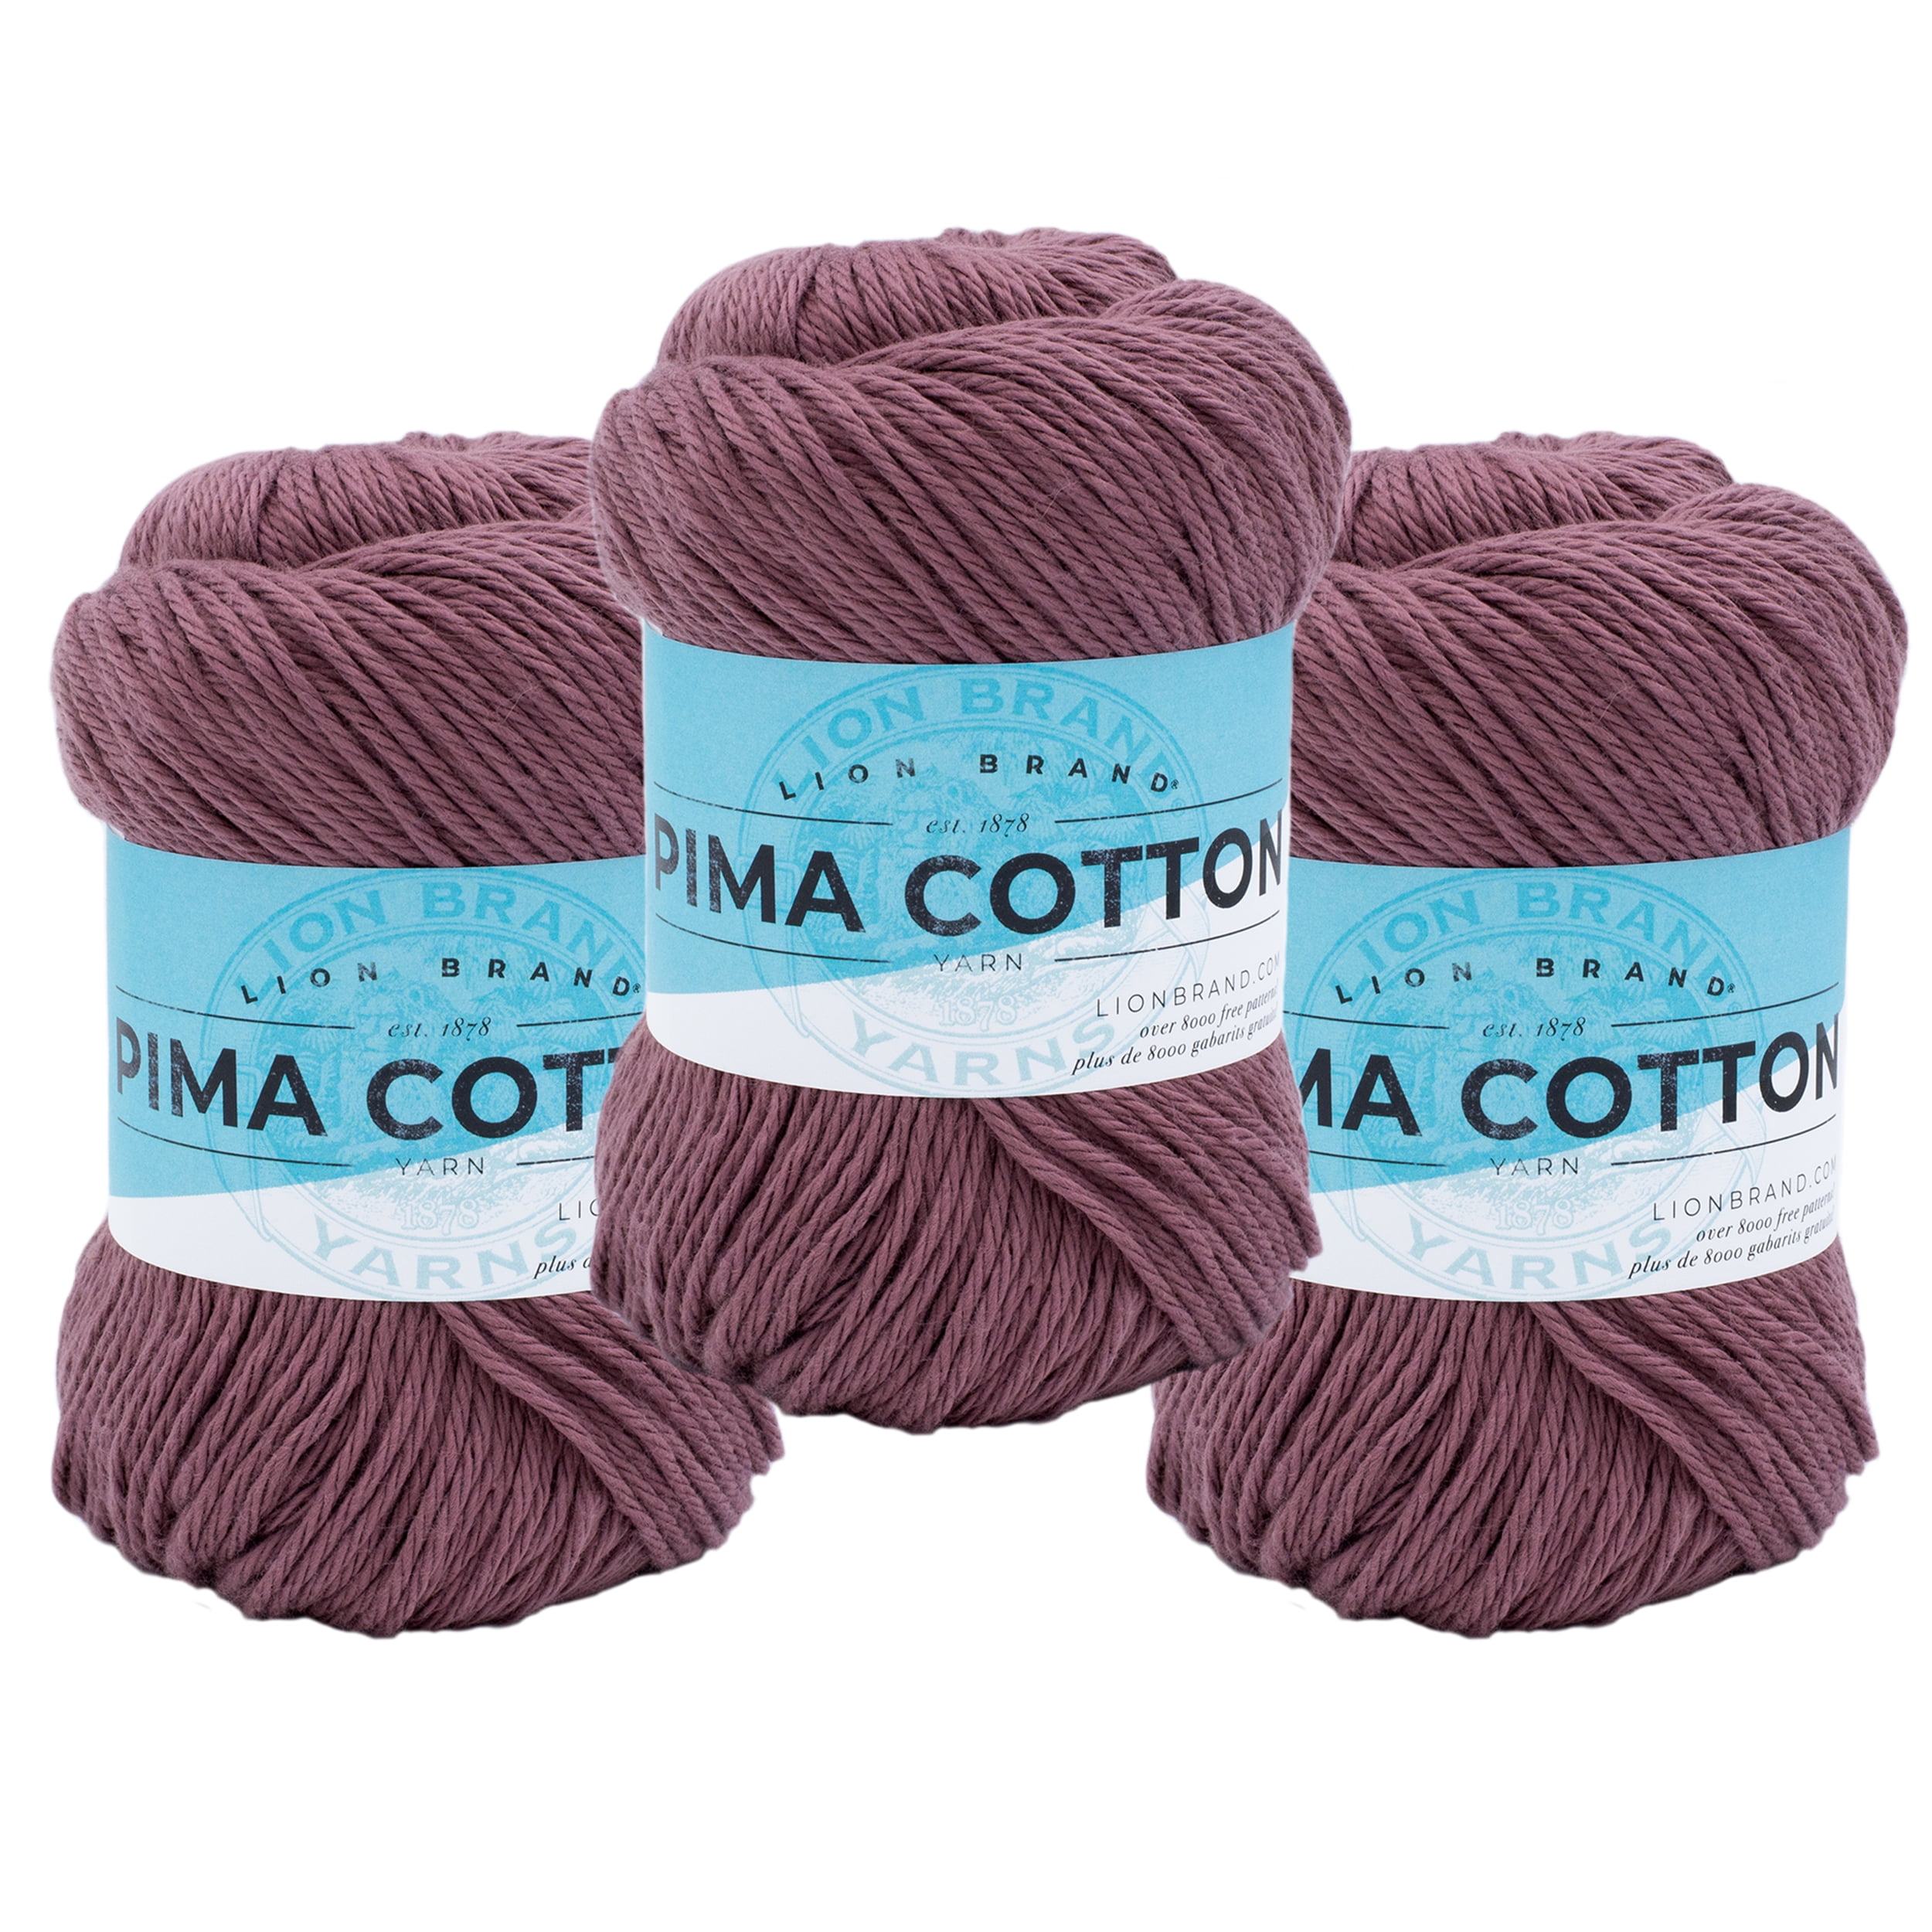 Lion Brand Pima Cotton Yarn-auburn : Target